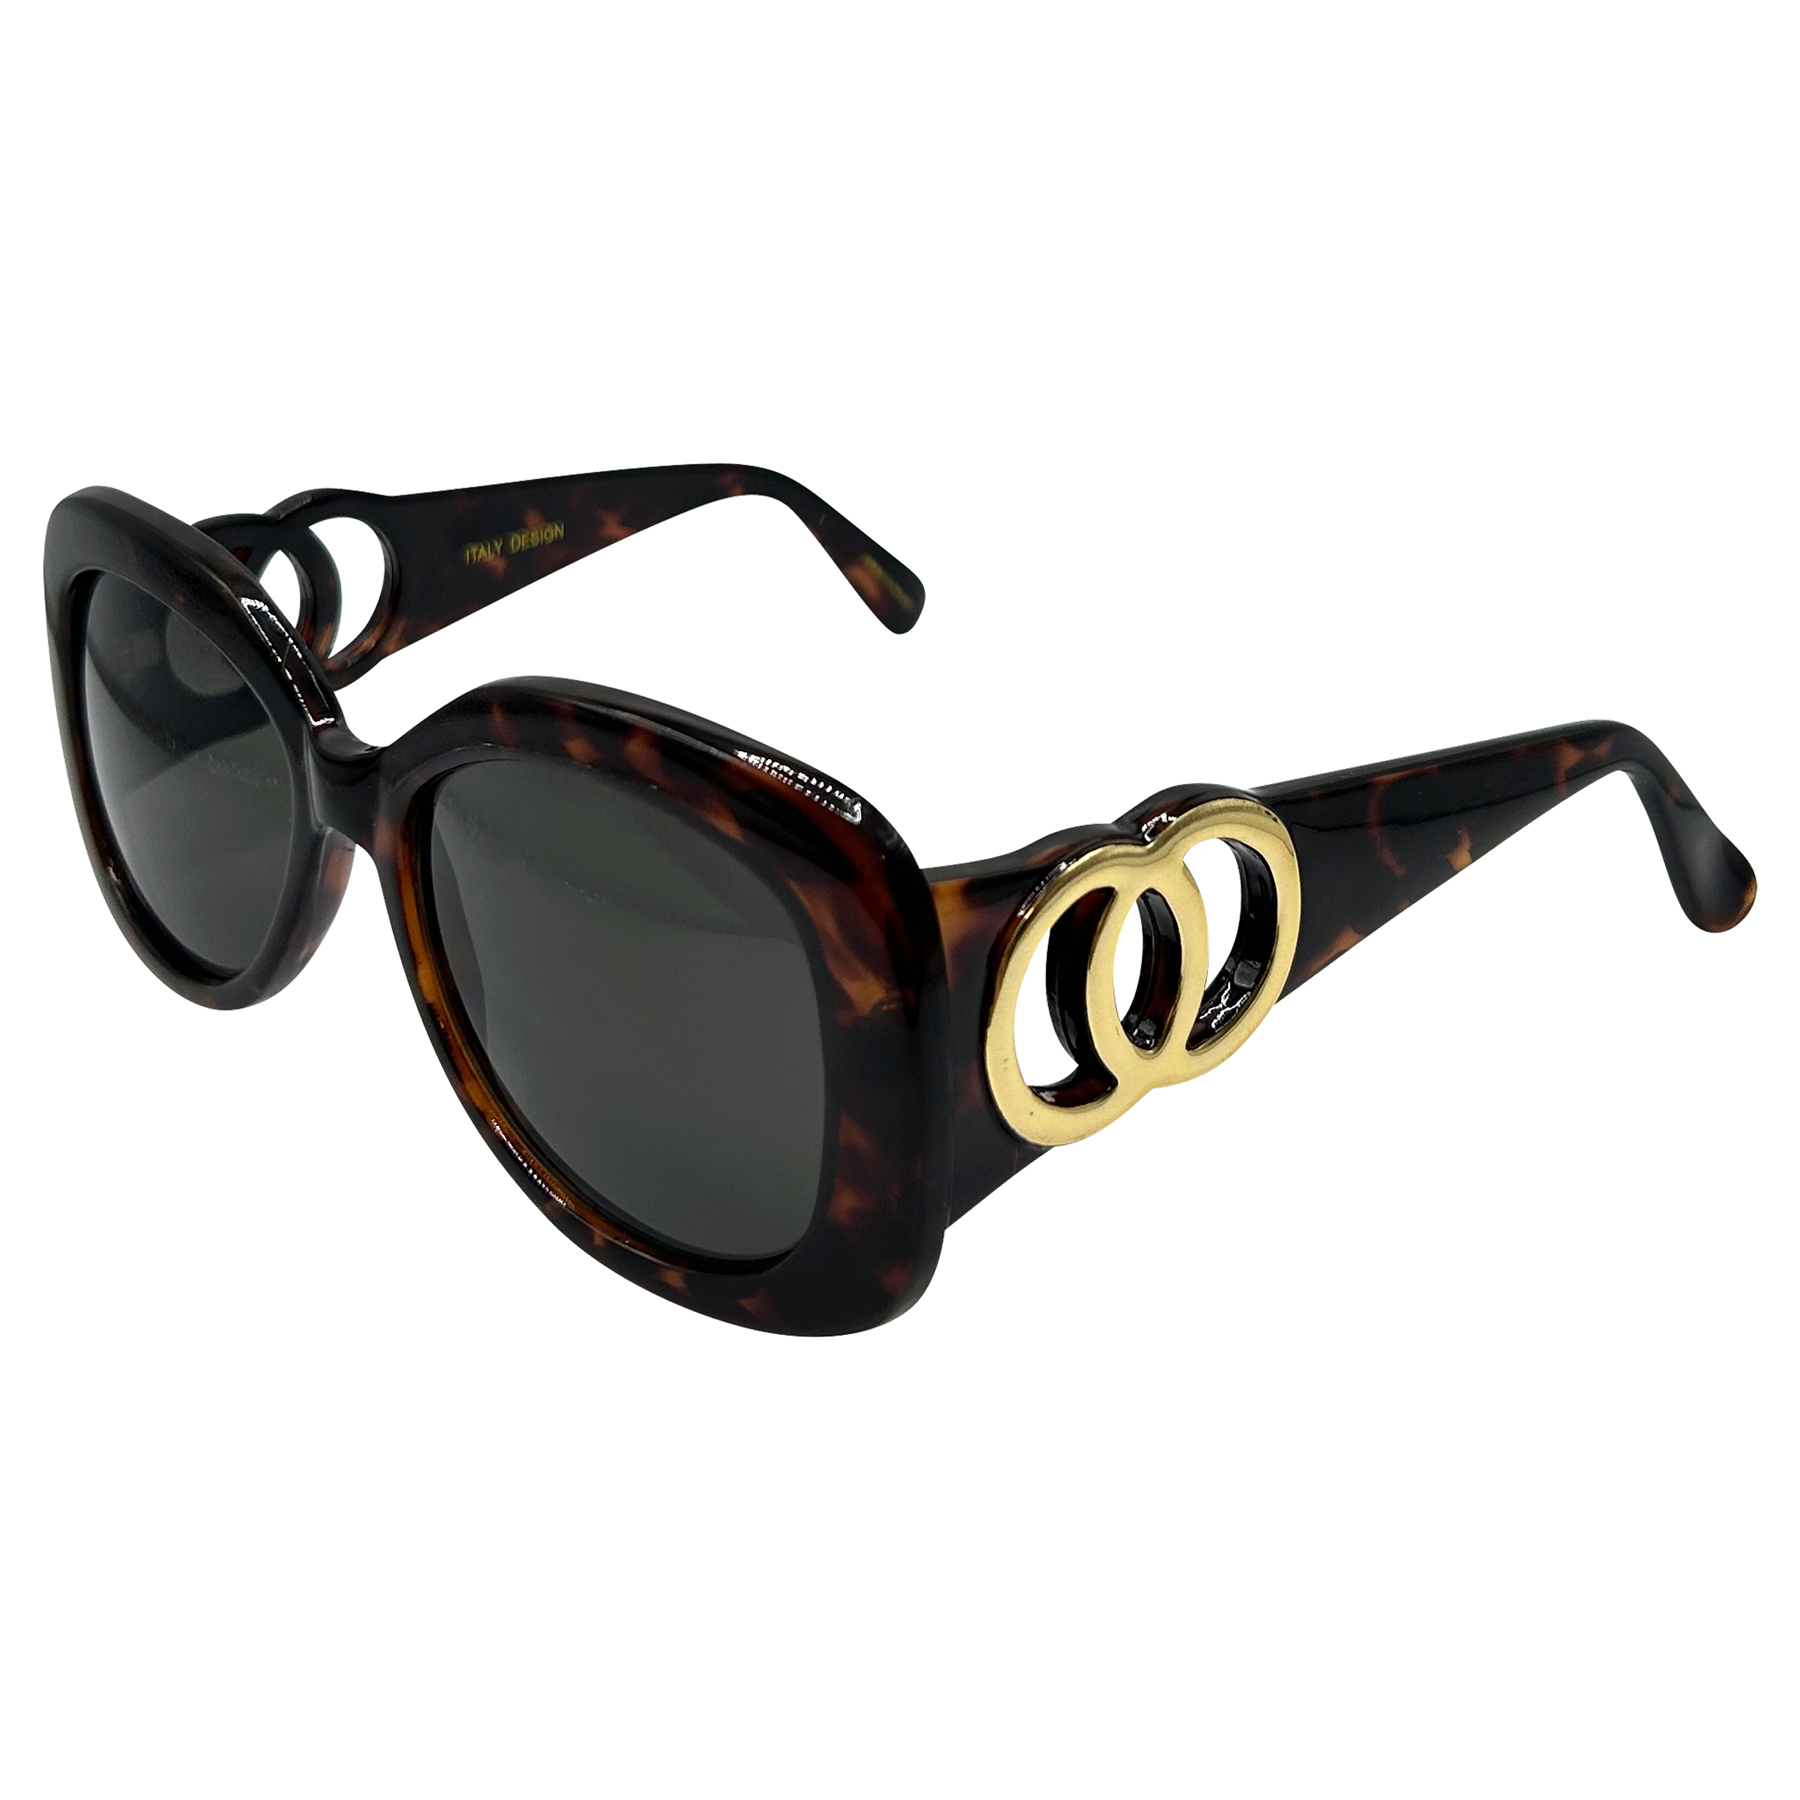 Shop Besitos Tortoise/Super Dark Mod 90s Vintage Sunglasses